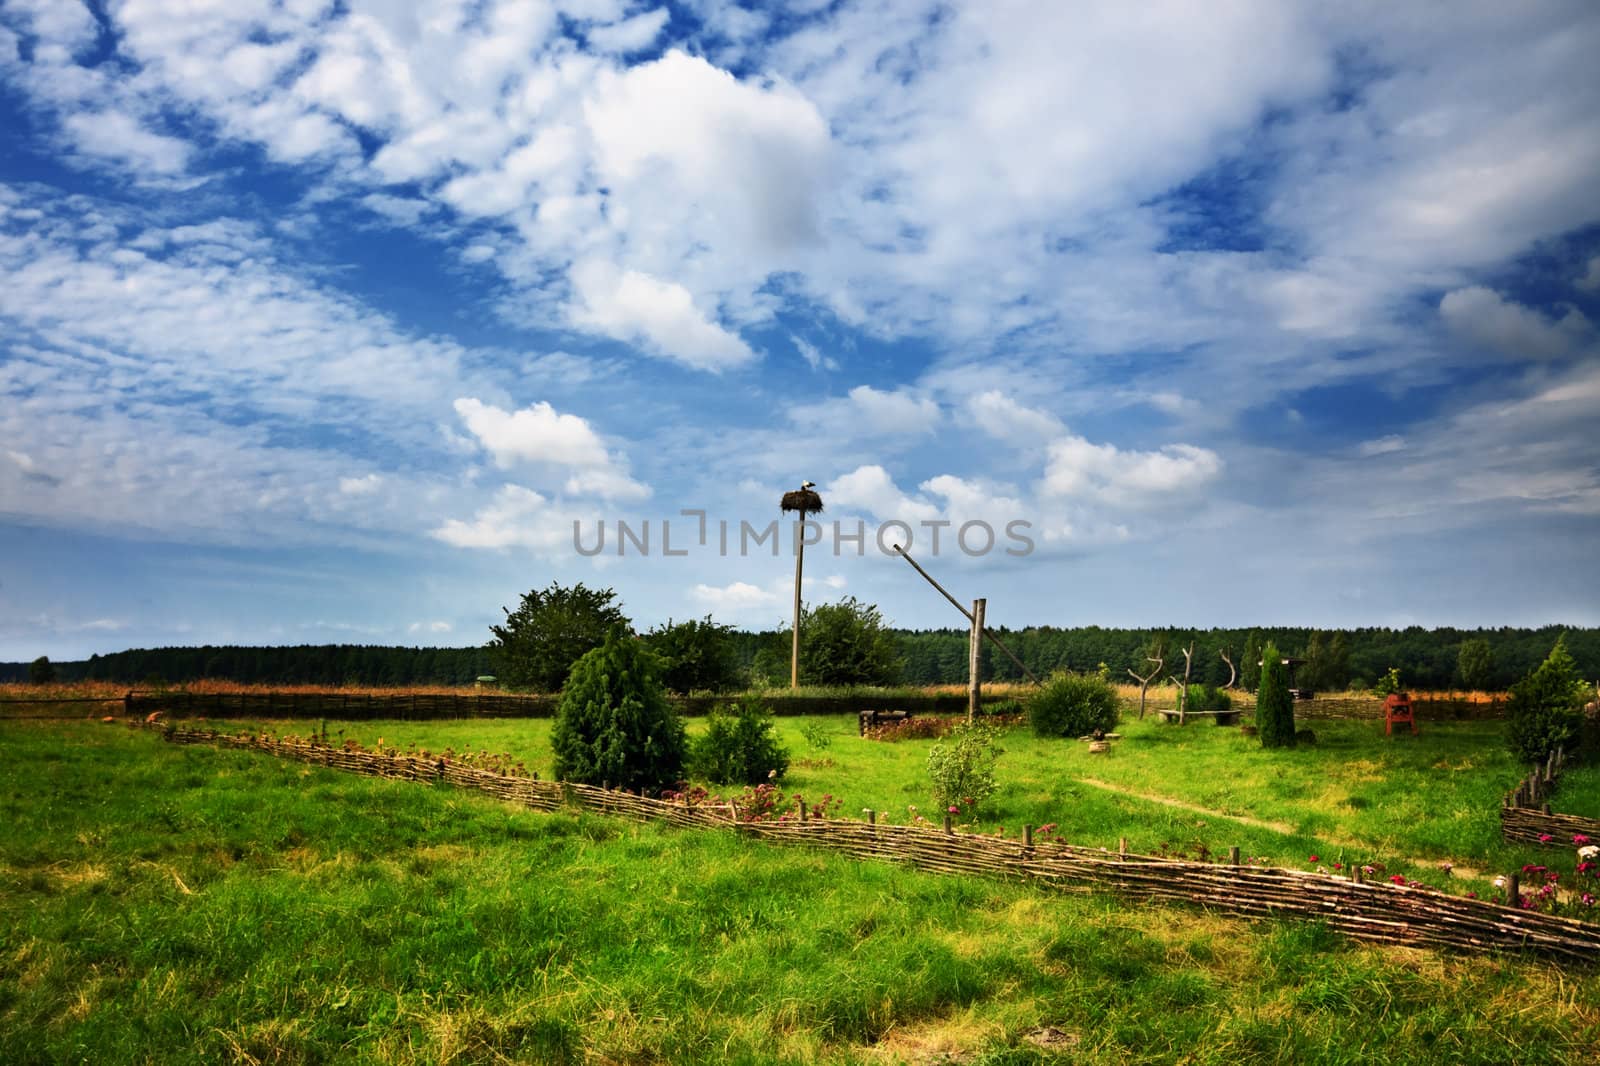 rural landscape with stork nest at summer day